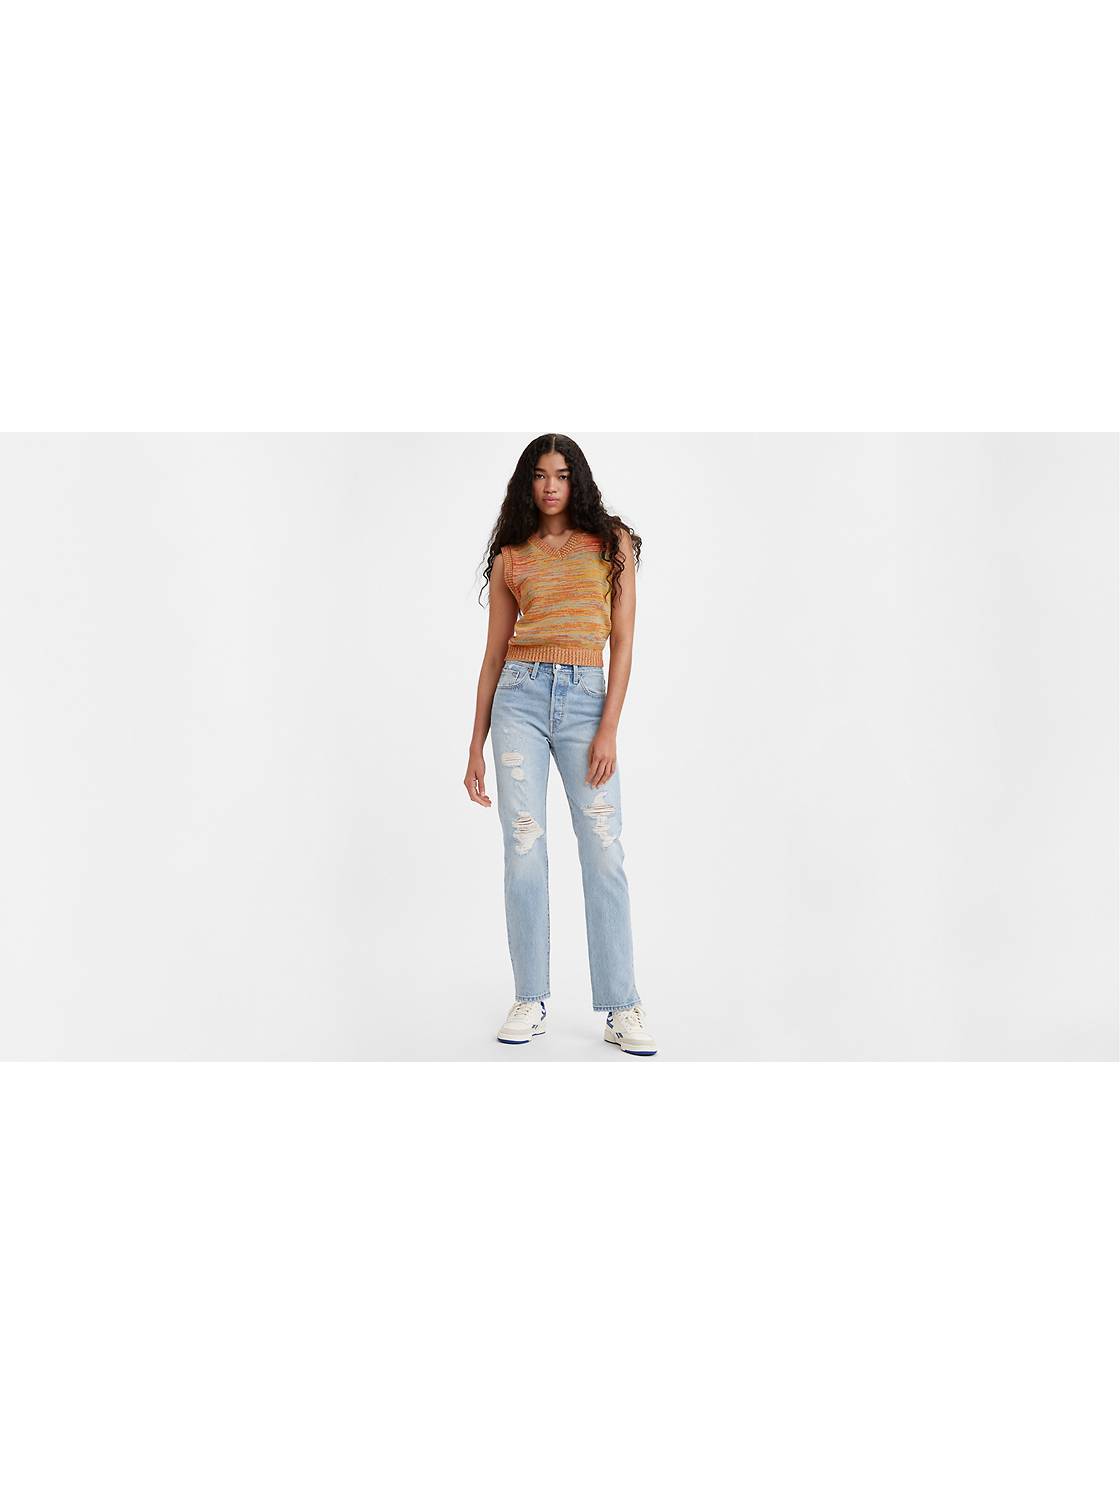 Mentalt i går Descent Levi's 501® Jeans for Women - The Original Button Fly | Levi's® US